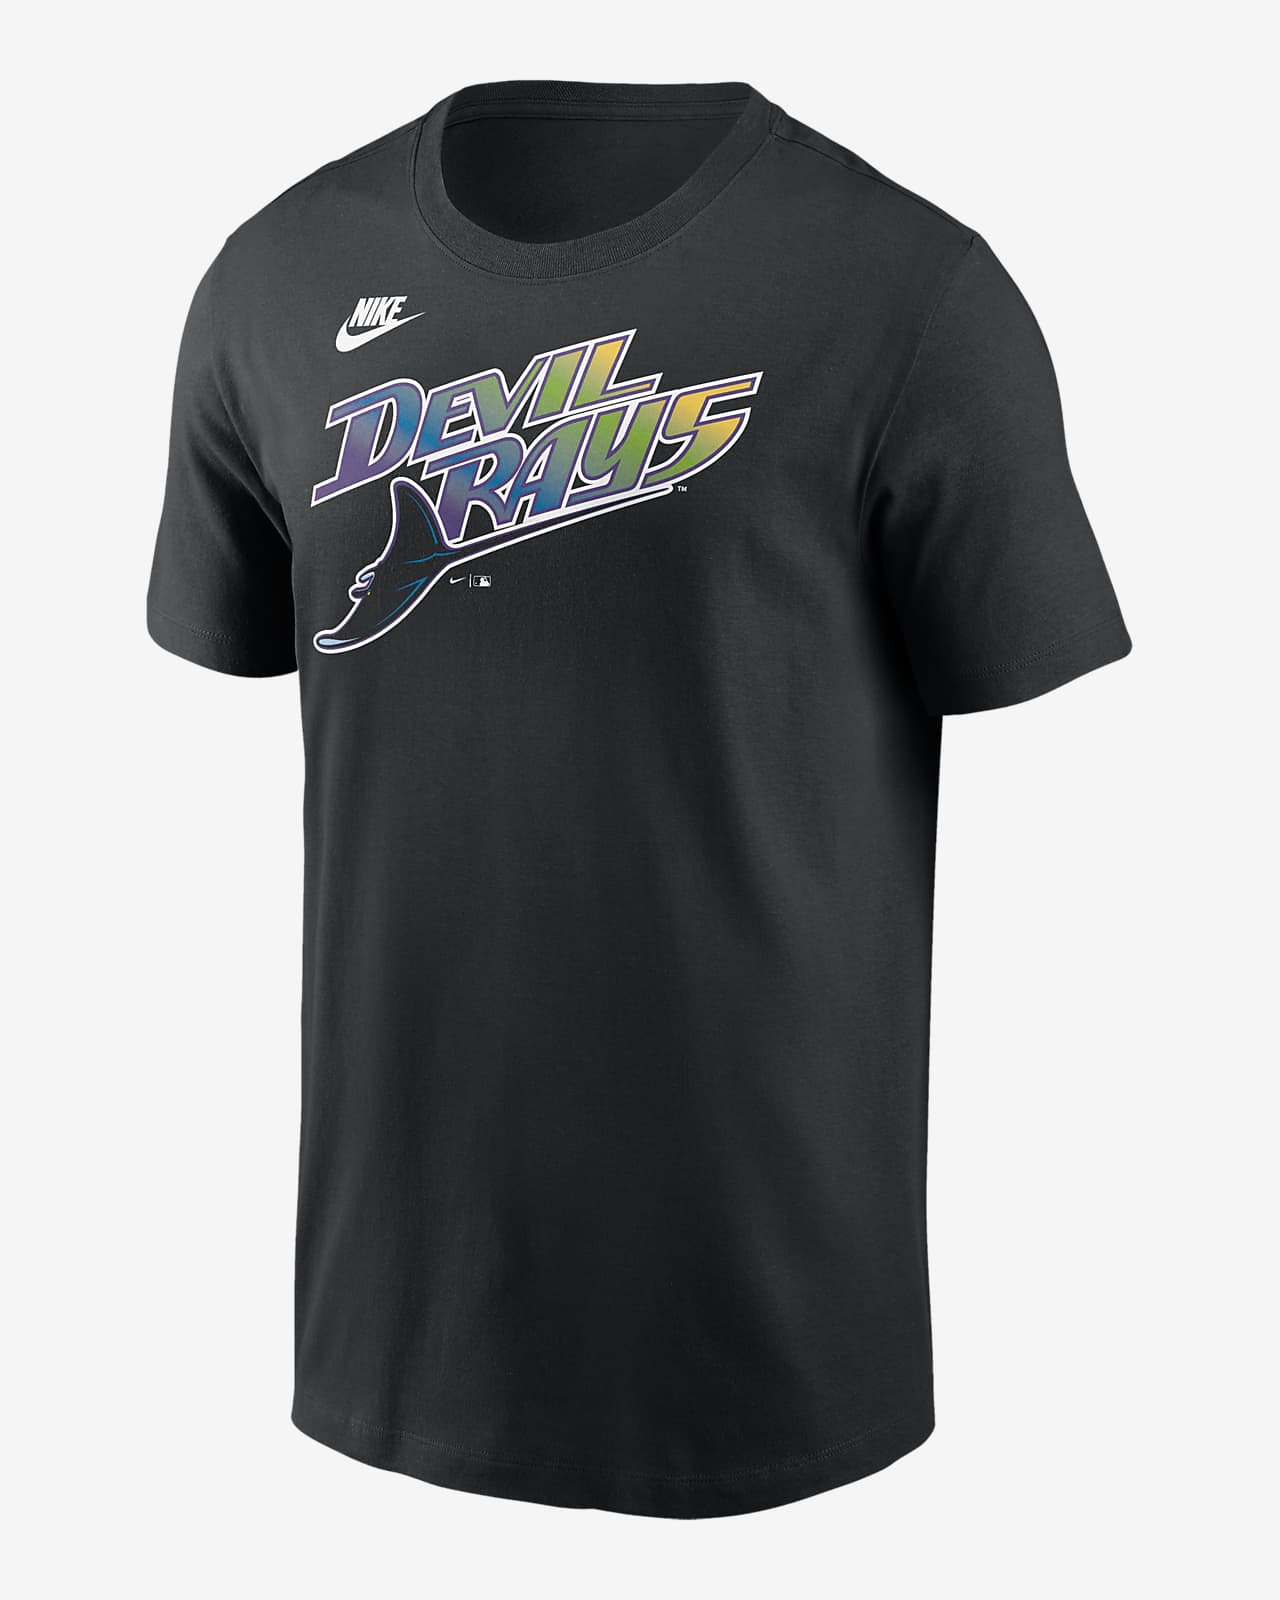 Tampa Bay Rays Cooperstown Wordmark Men's Nike MLB T-Shirt